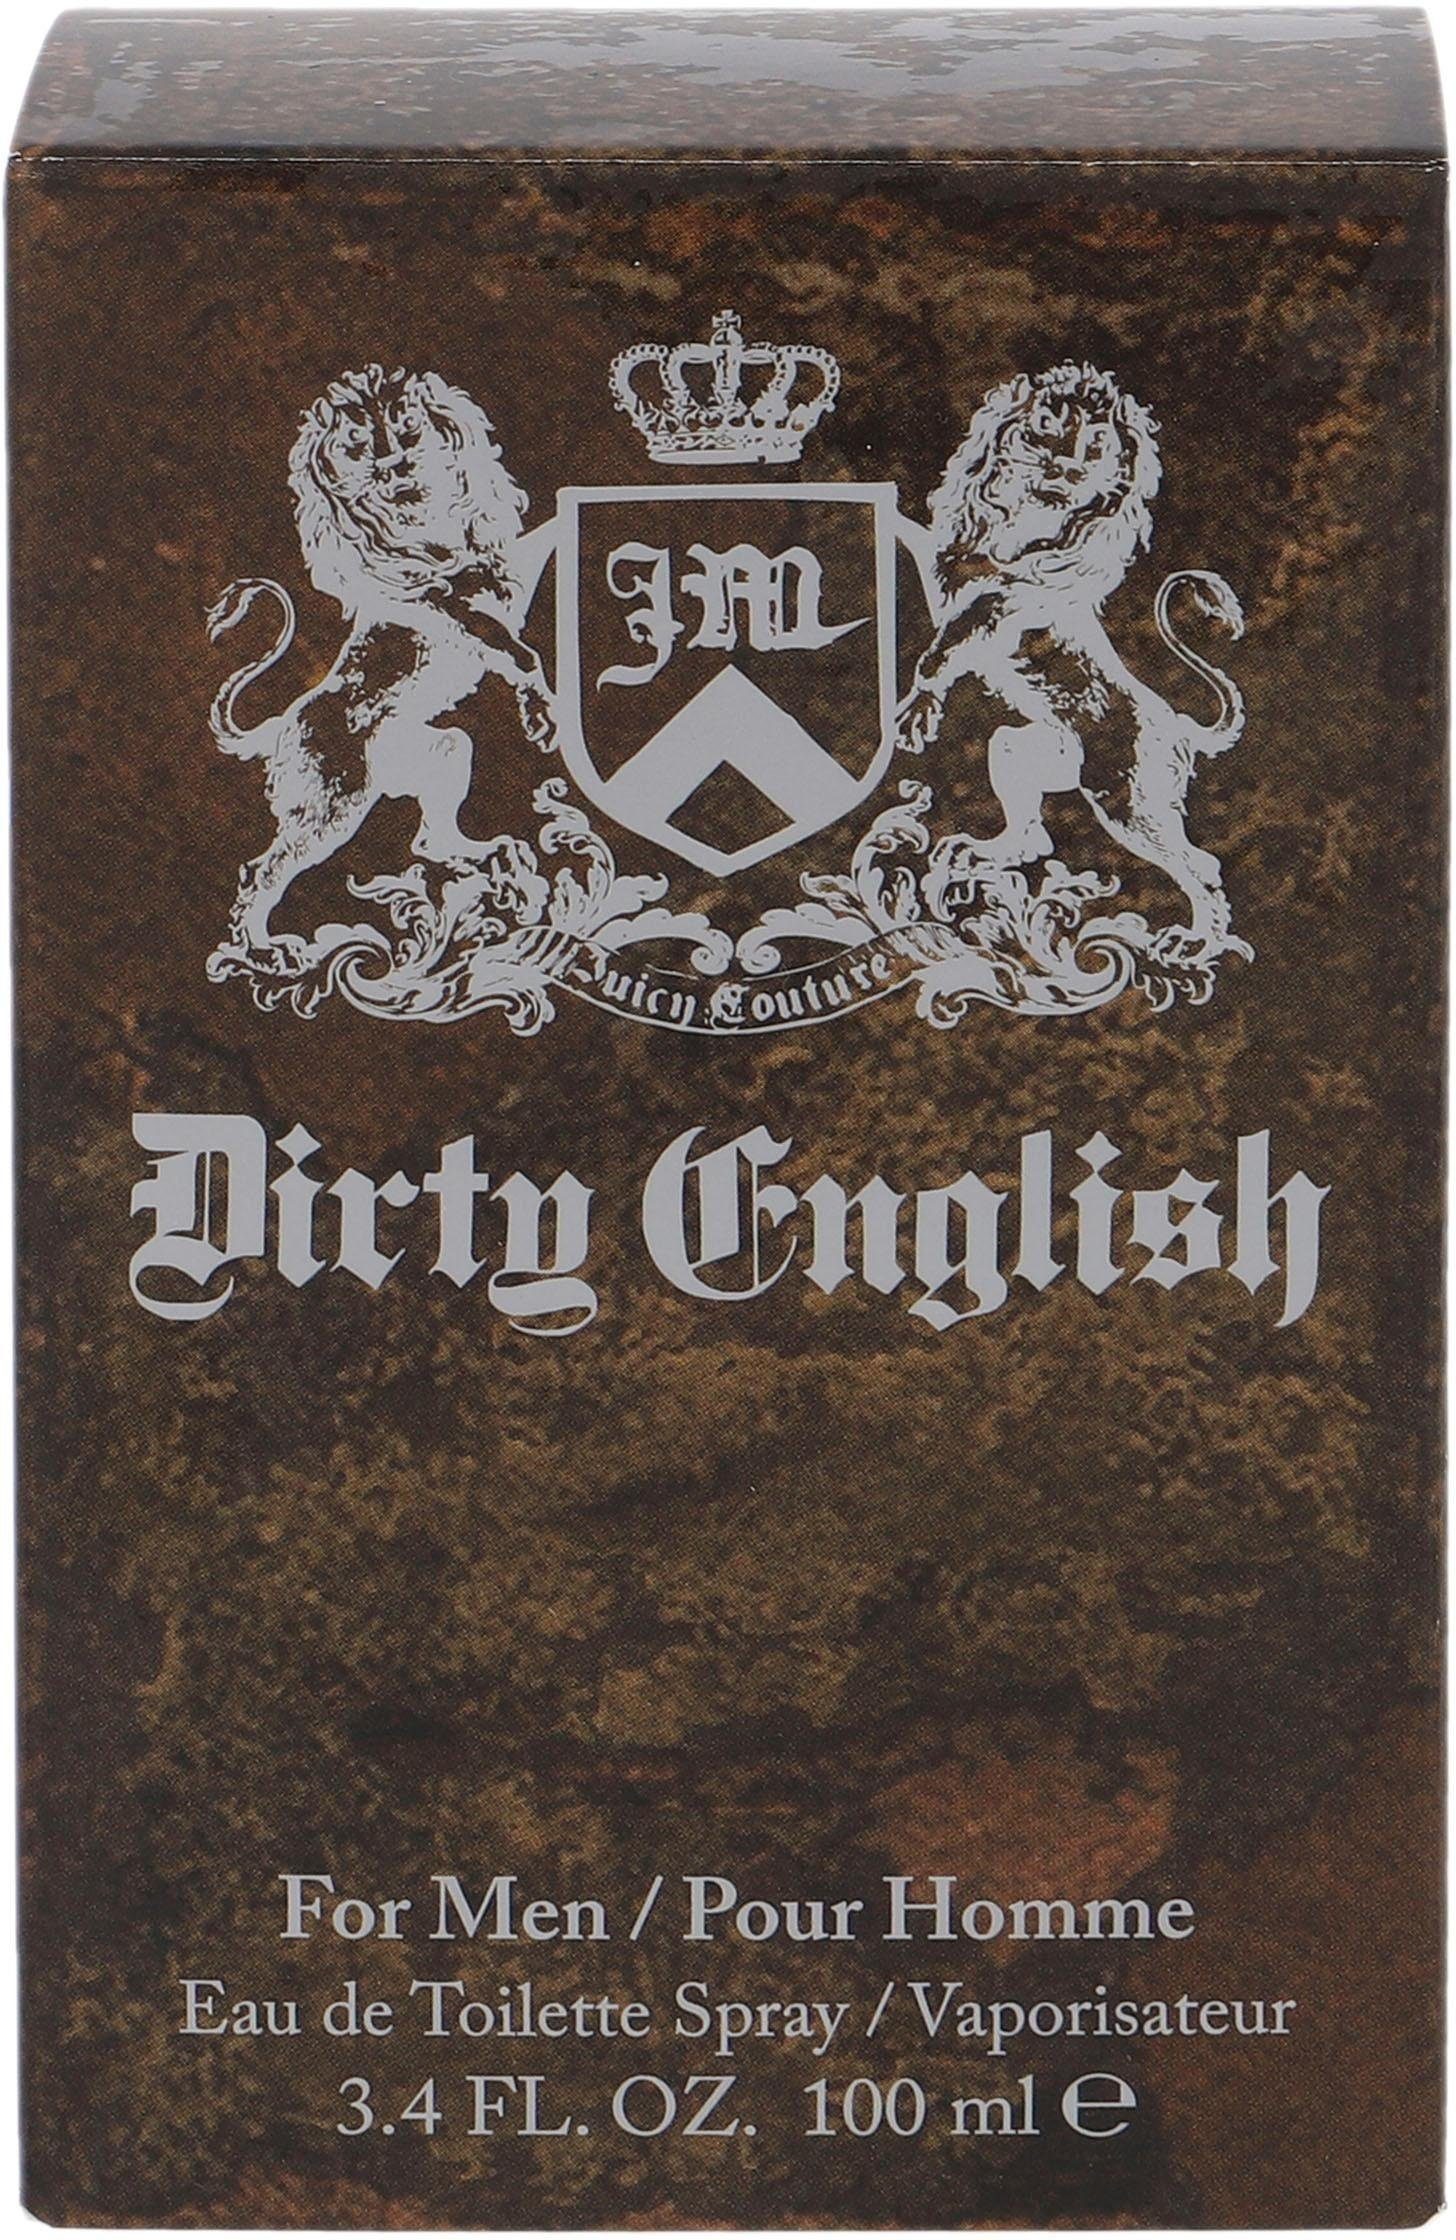 Juicy Couture de English Toilette by Dirty Eau Juicy